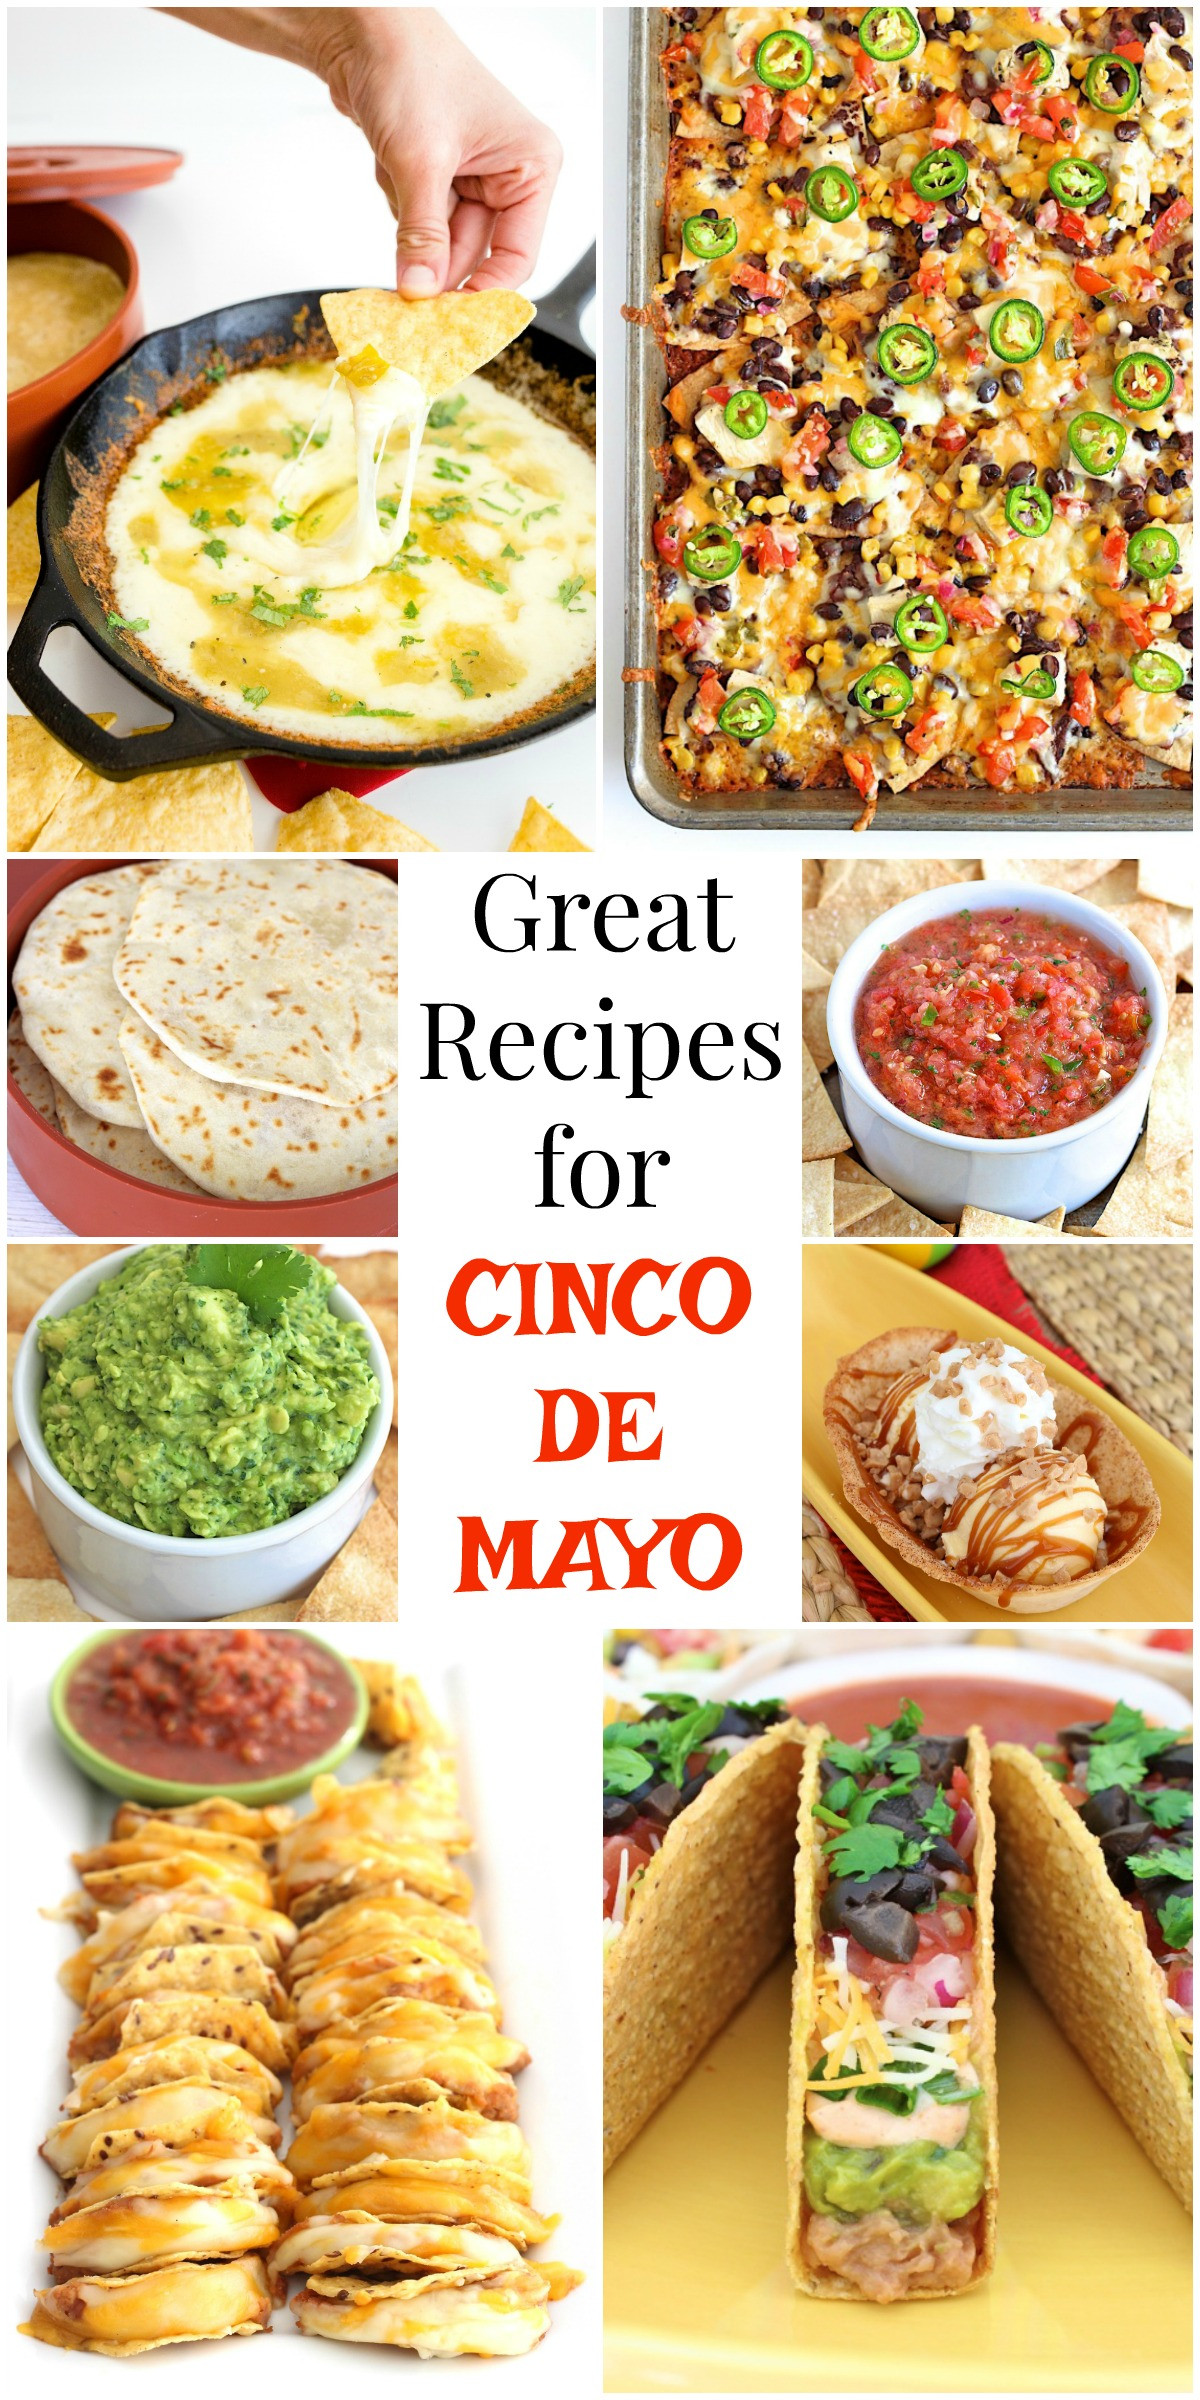 Mexican Recipes For Cinco De Mayo
 15 Great Recipes for Cinco de Mayo